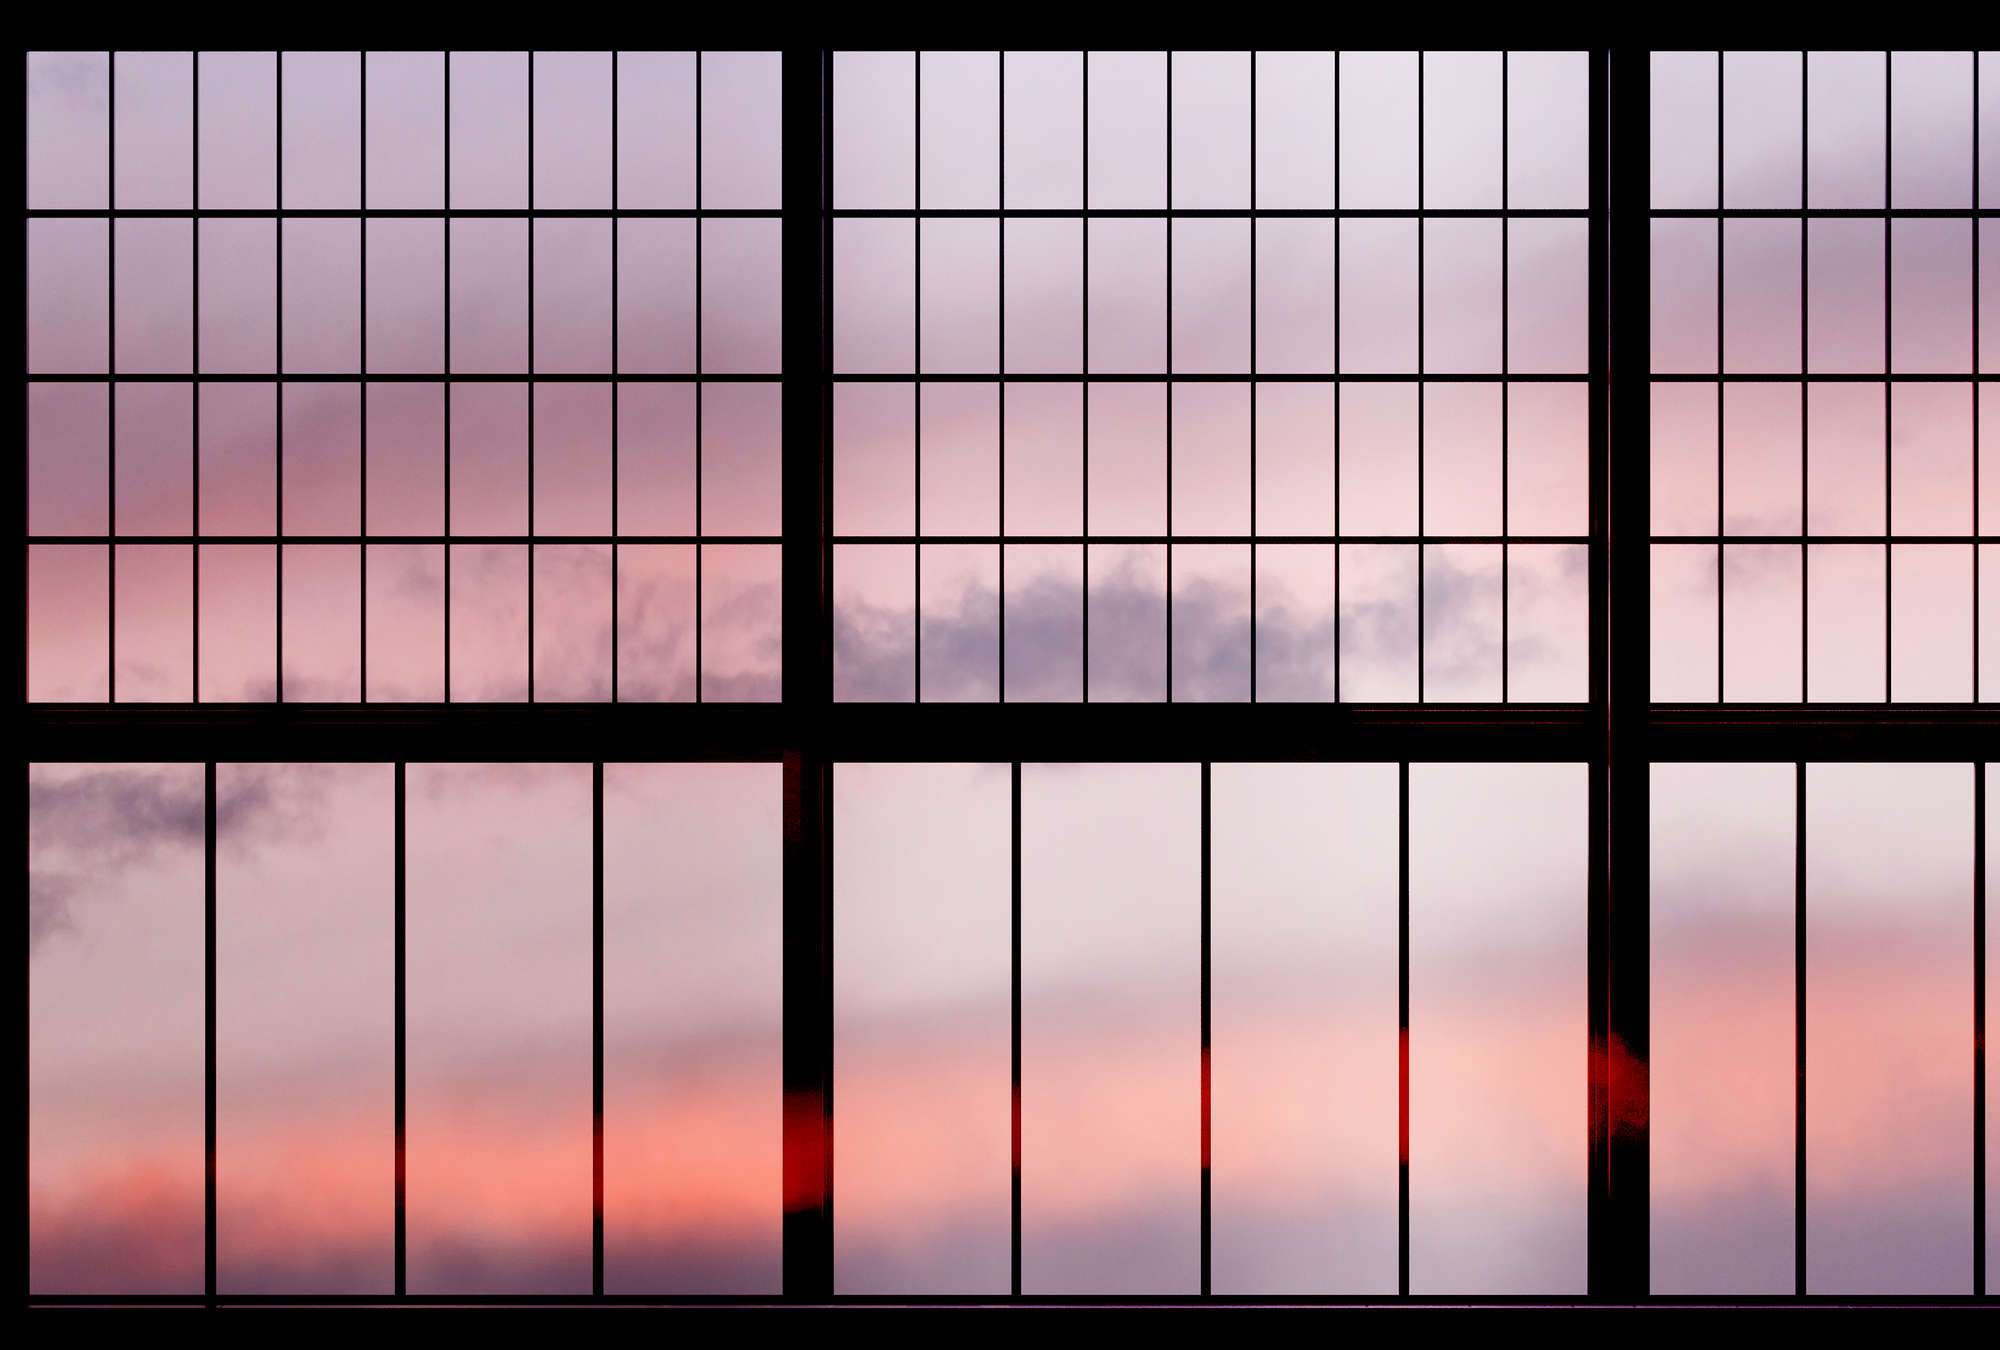             Sky 1 - Photo wallpaper Window View Sunrise - Pink, Black | Textured non-woven
        